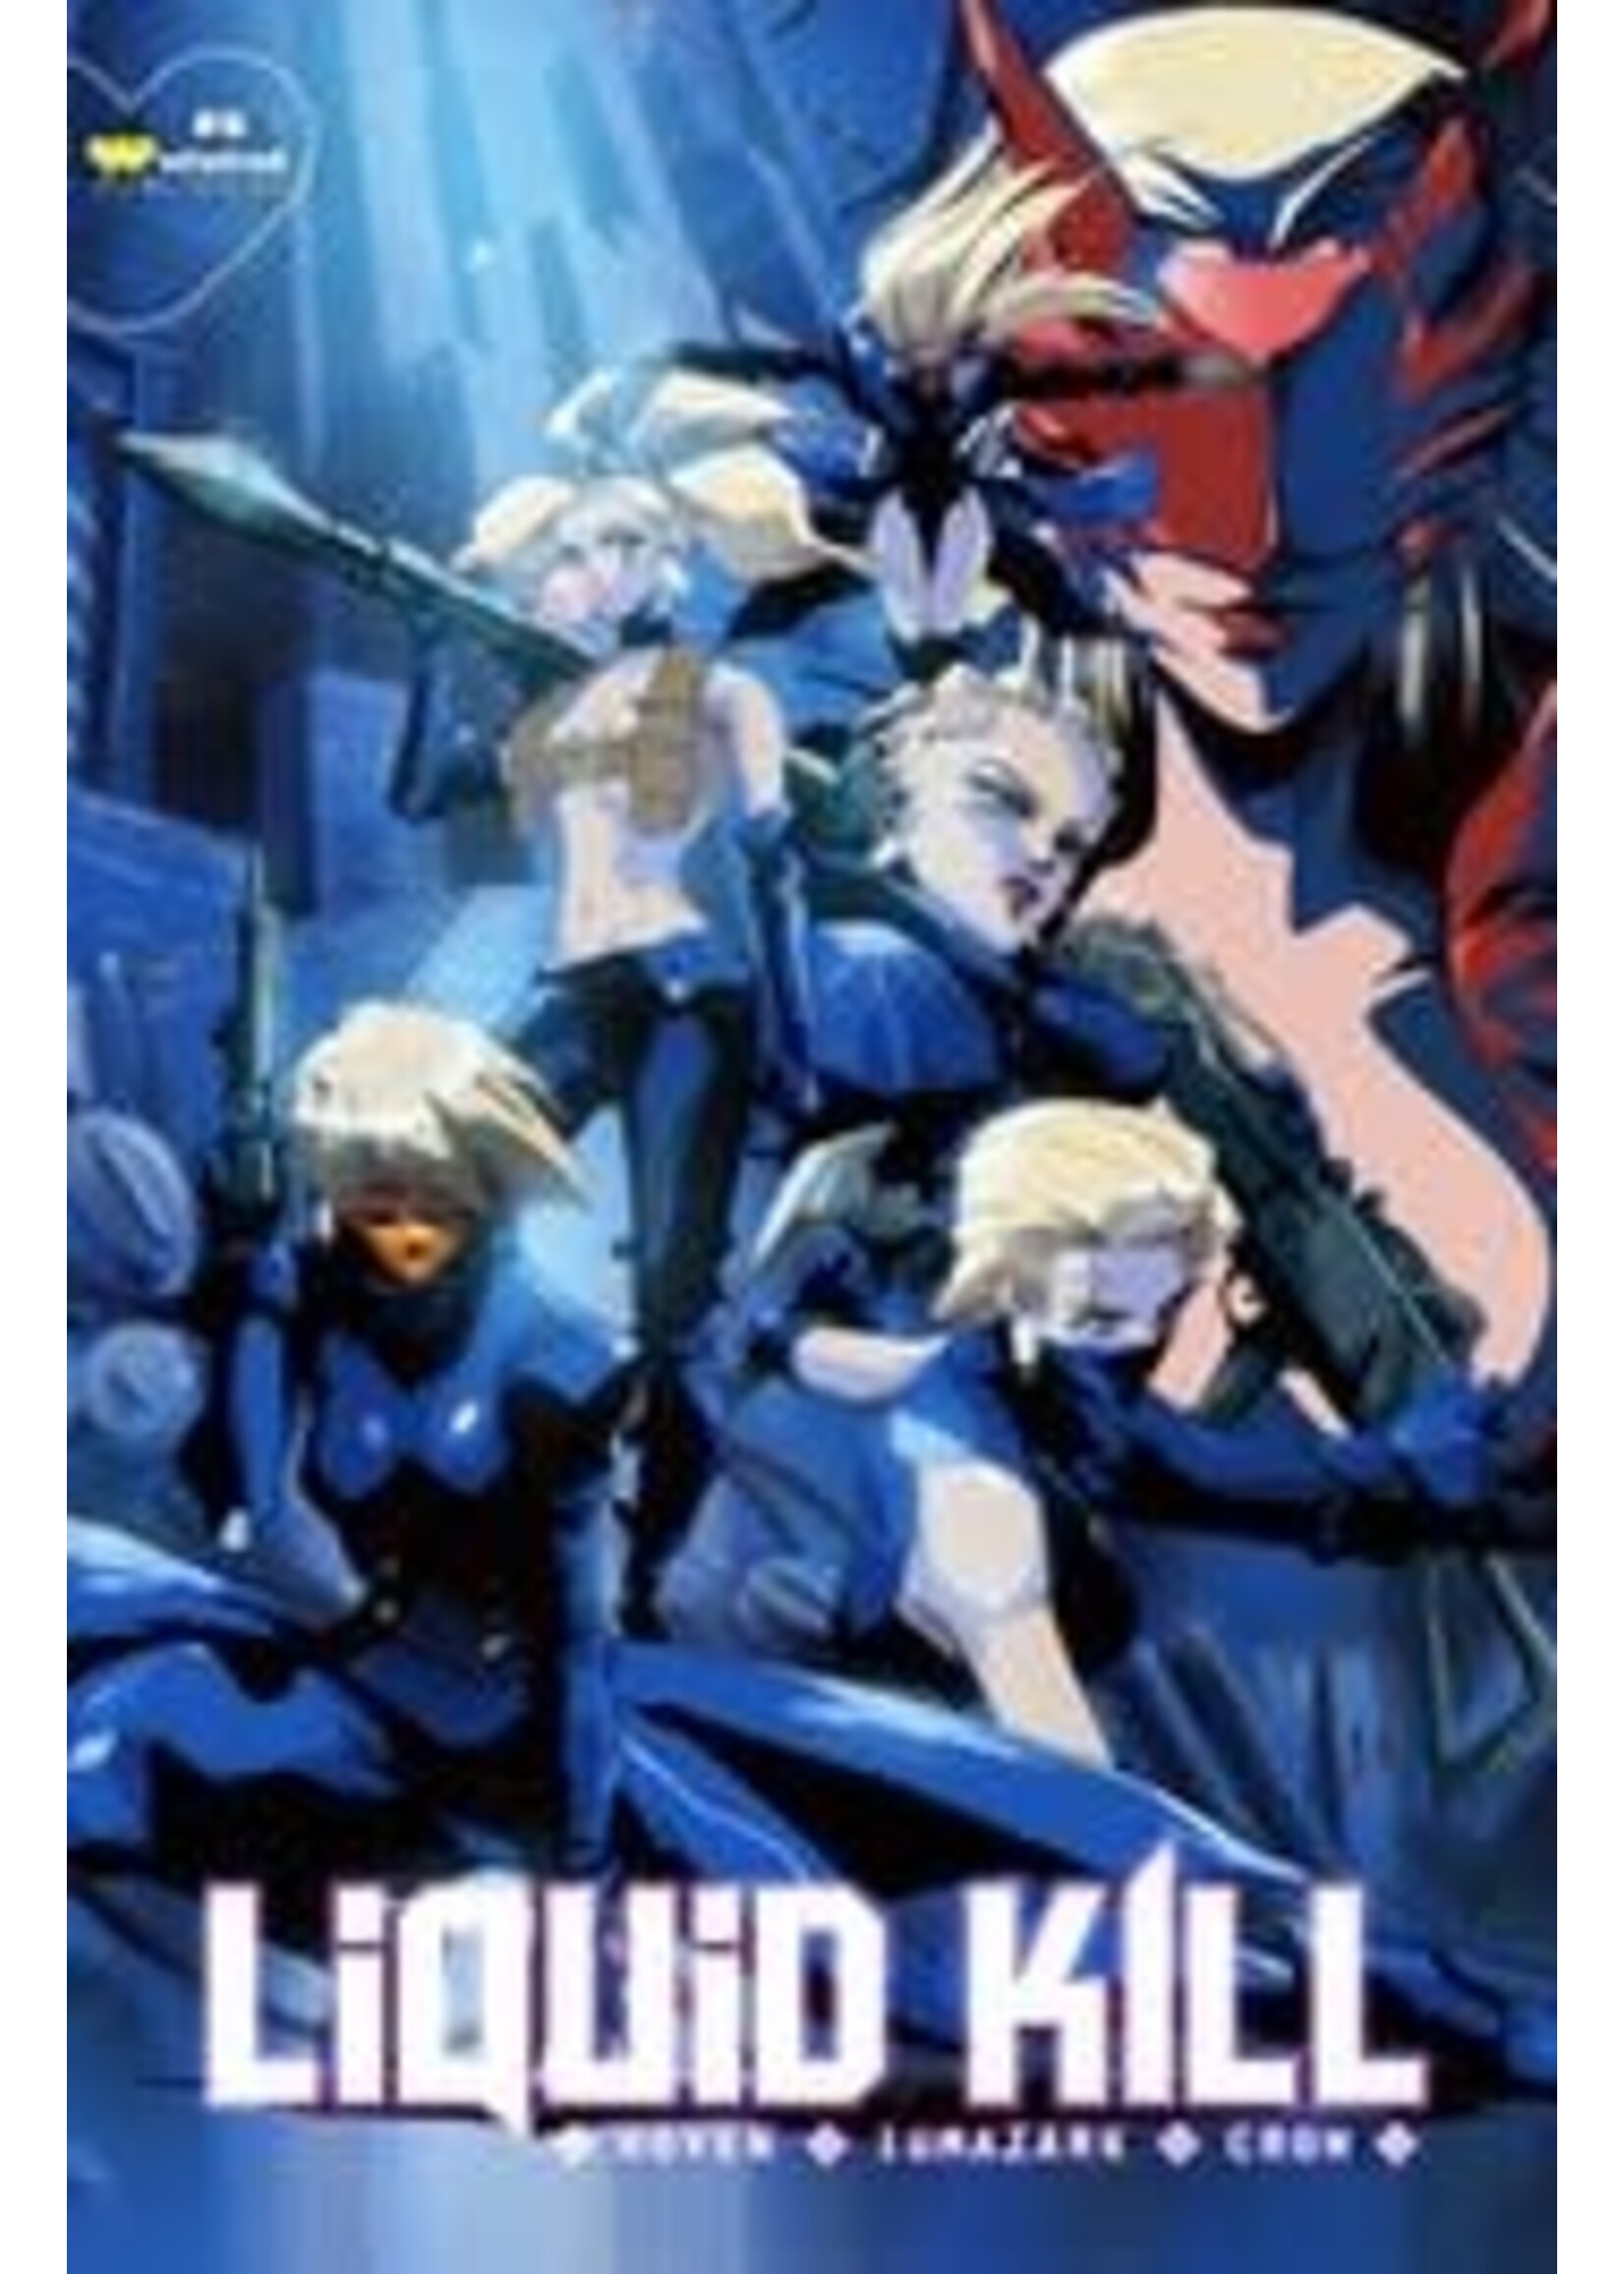 WHATNOT PUBLISHING LIQUID KILL complete 6 issue series